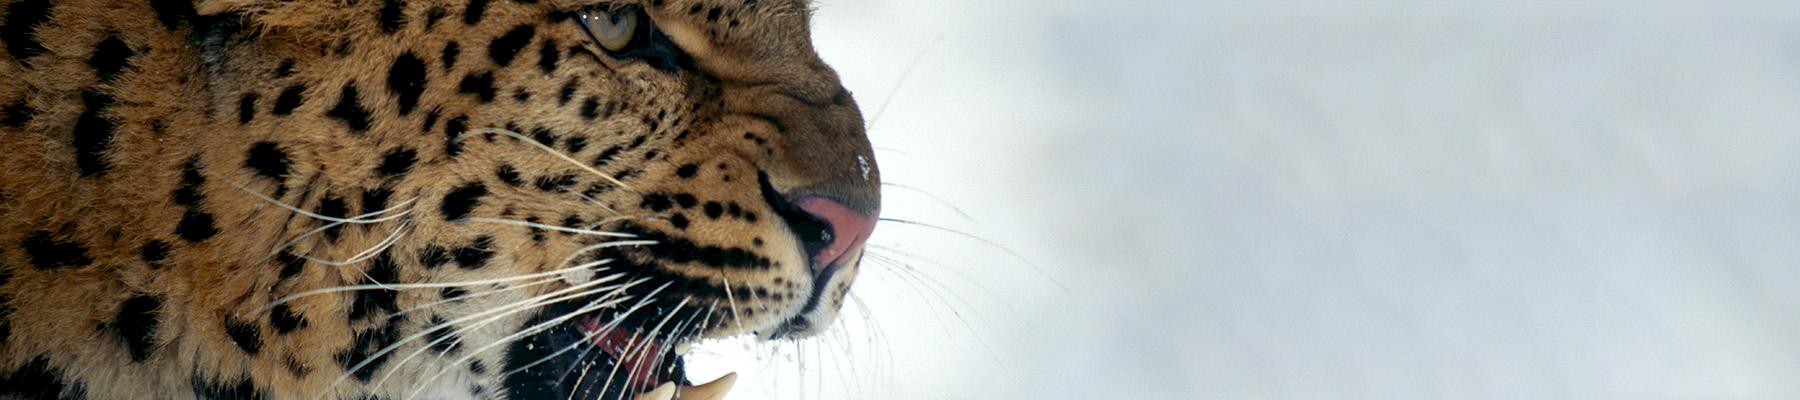 Amur Leopard Panthera pardus orientalis © naturepl.com / Lynn M. Stone / WWF